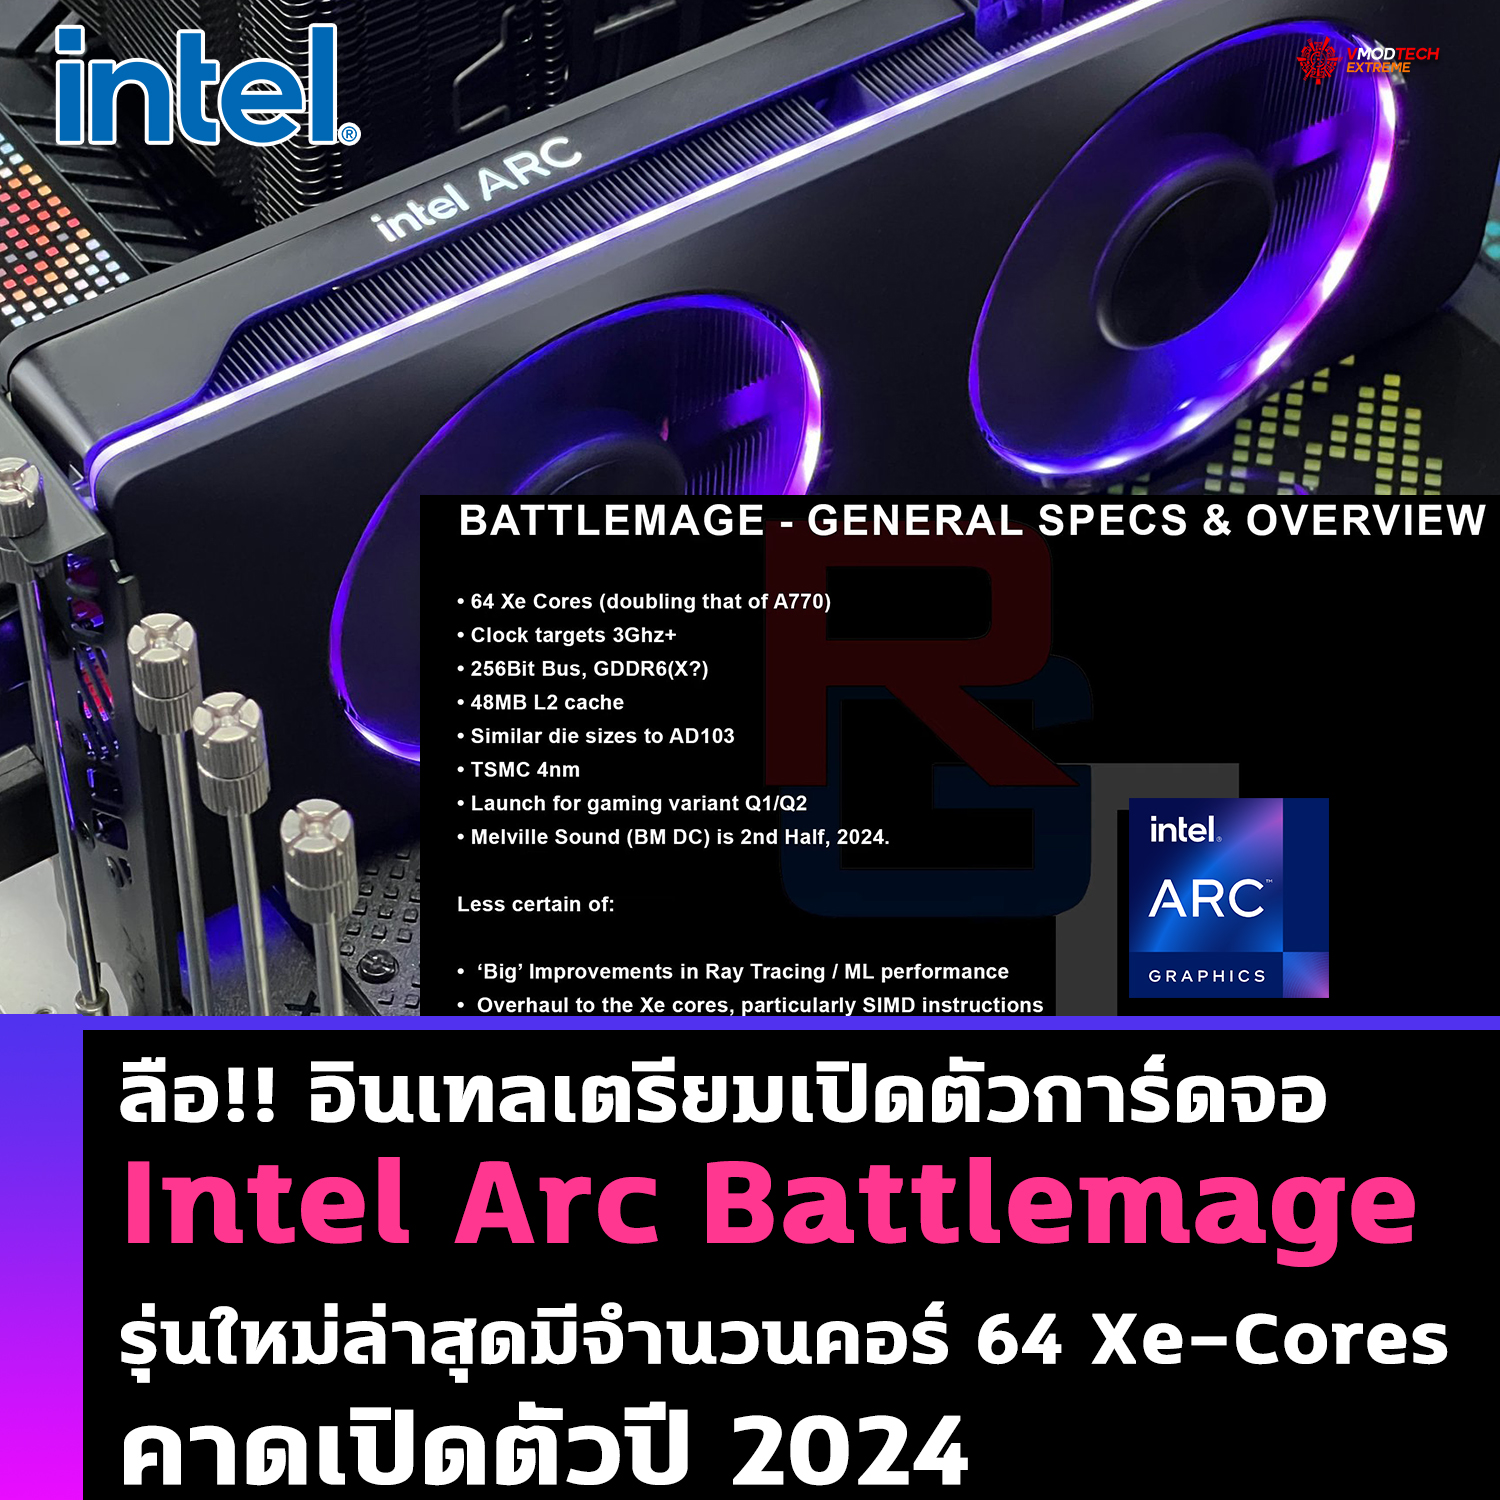 intel arc battlemage ลือ!! การ์ดจอ Intel Arc Battlemage รุ่นใหม่ล่าสุดมีจำนวนคอร์ 64 Xe Cores